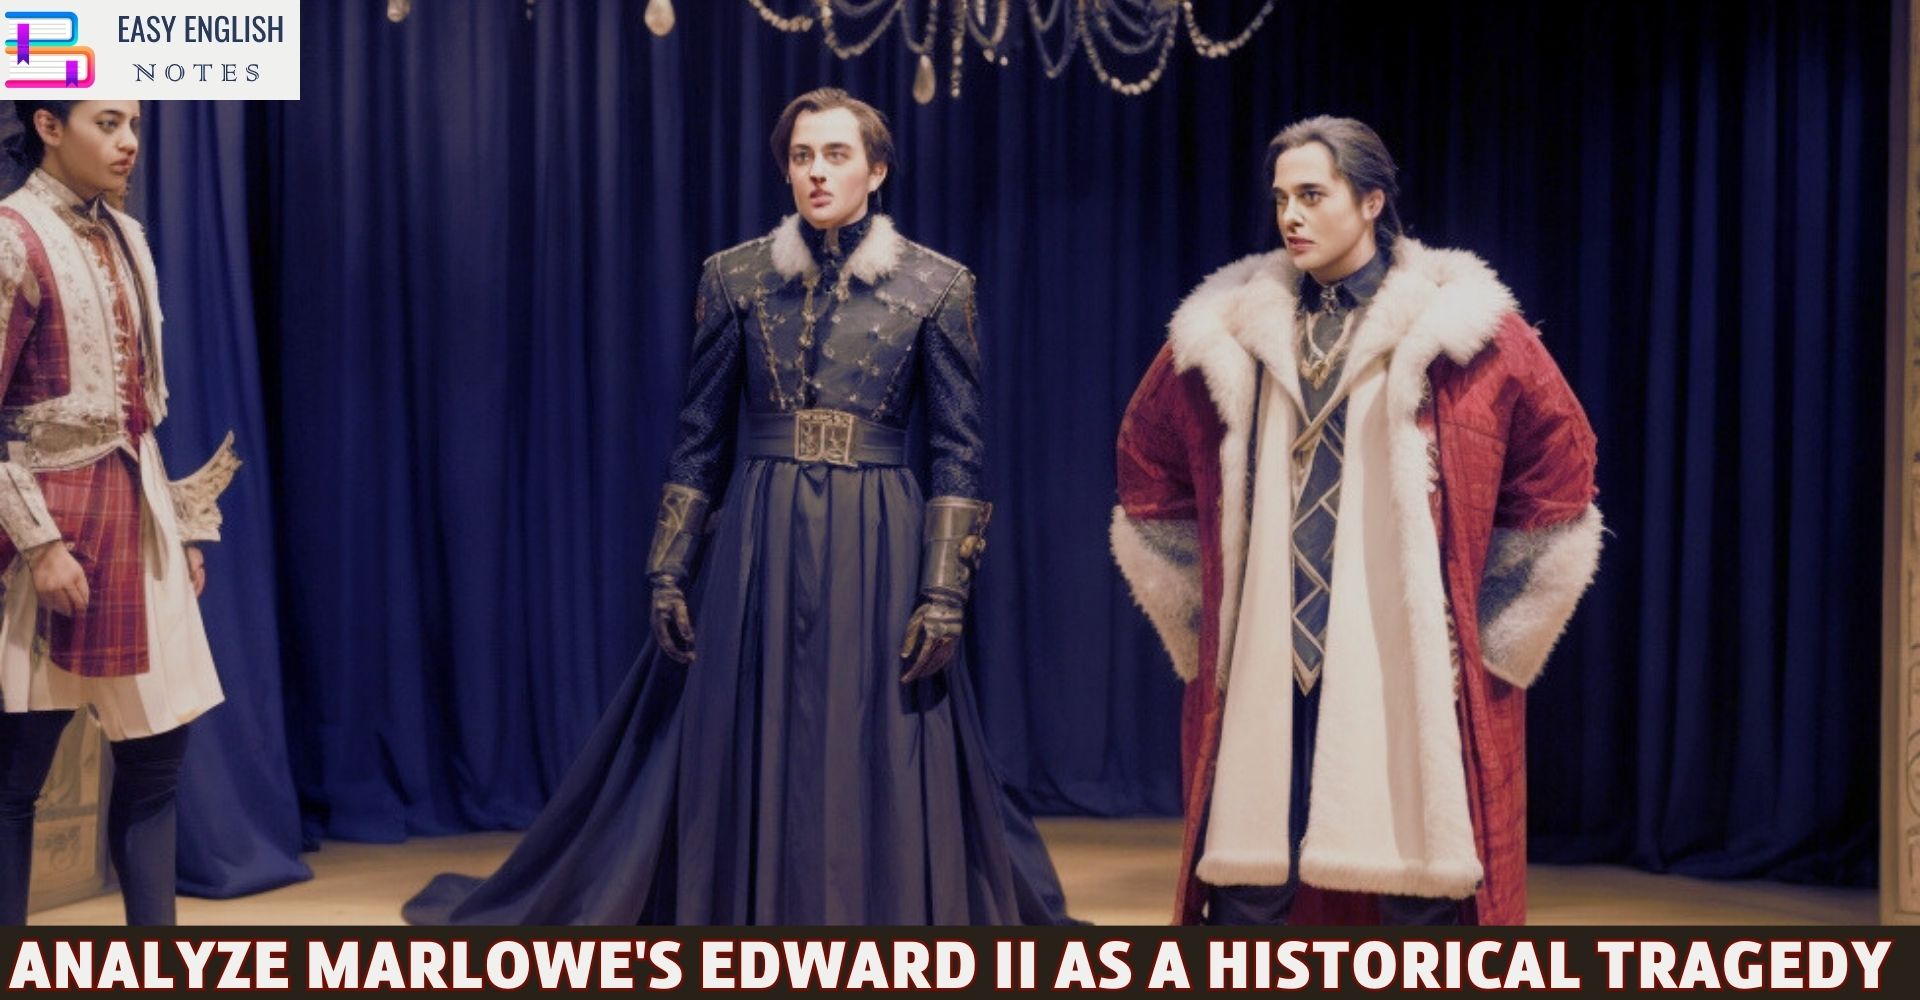 Line By Line Explanation Of Edward II By Marlowe